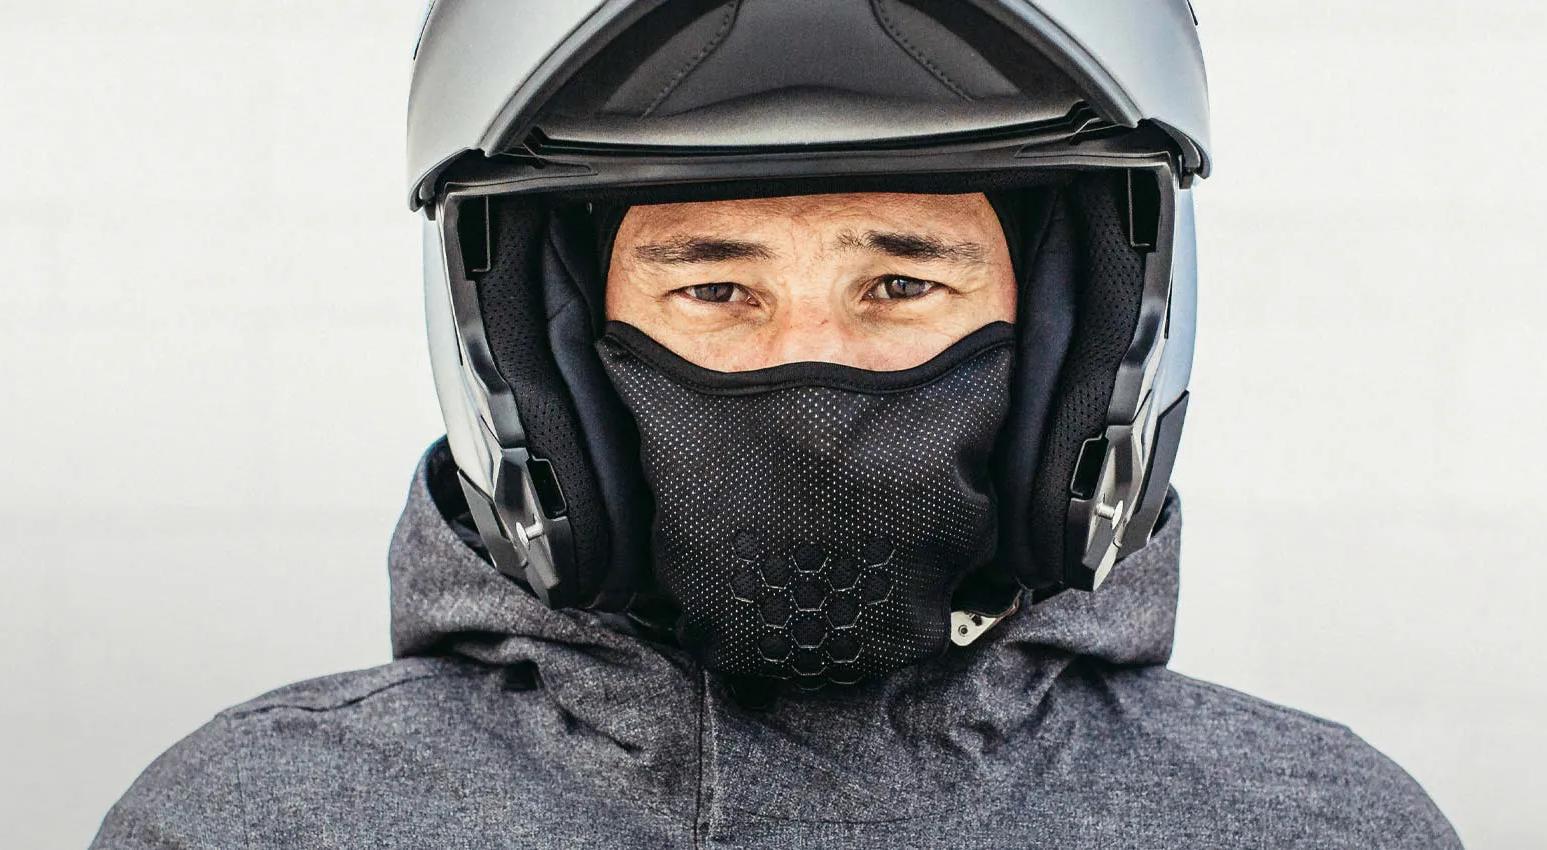 cagoule moto_tour de cou_ski-paintball-Sports-moto-respirant-motard-froid-hiver 